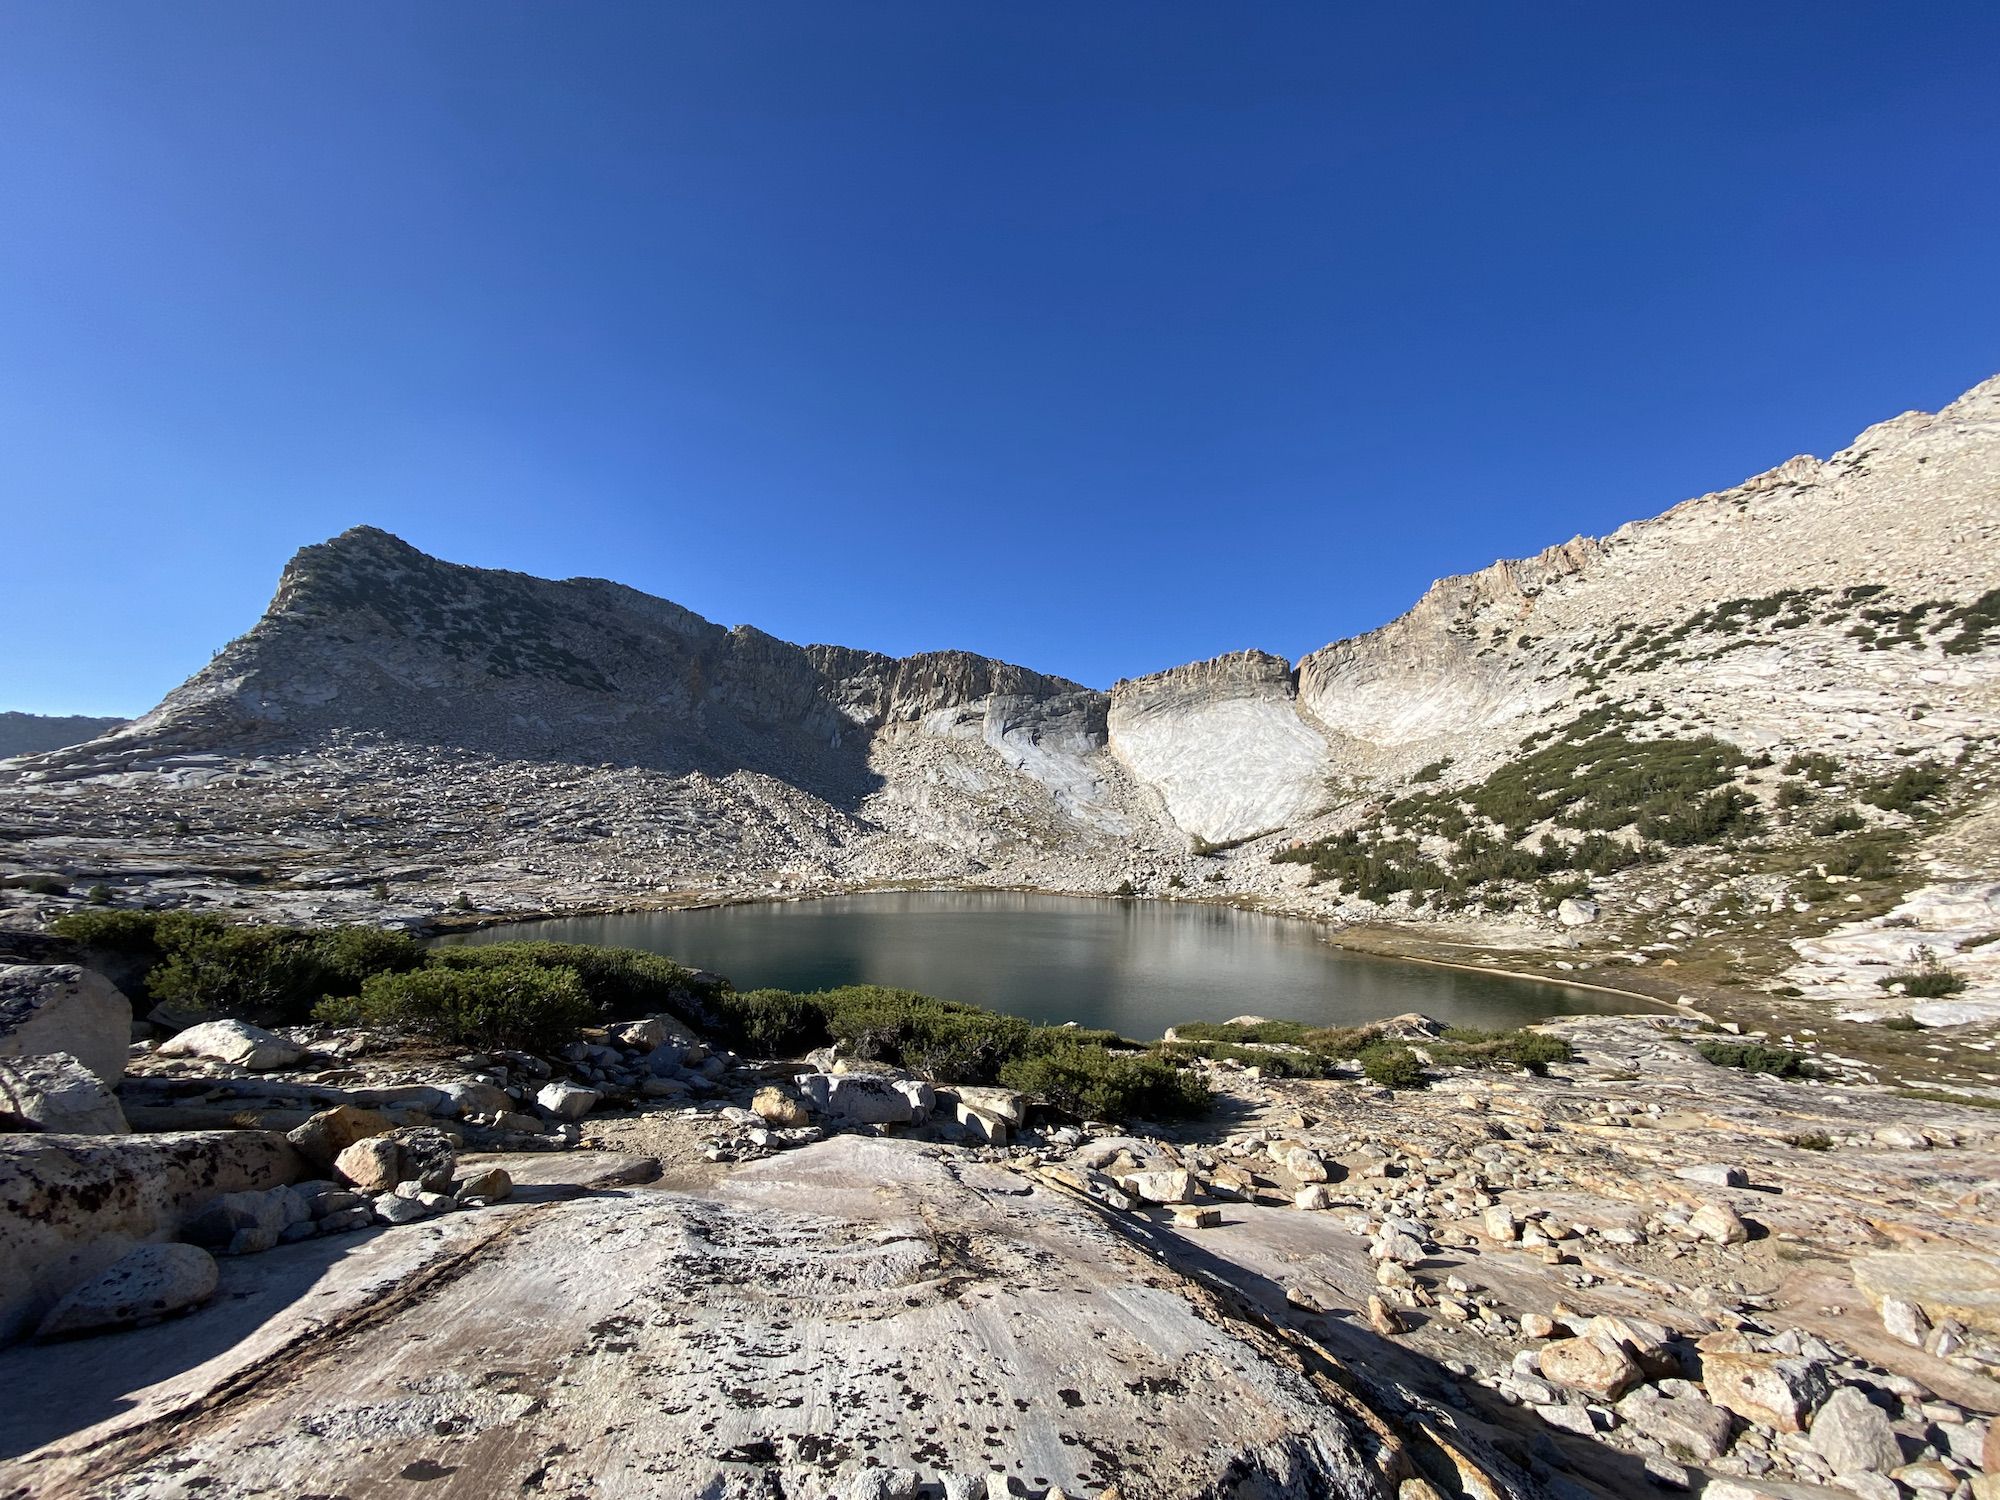 A small lake nestled among bare rock mountains.